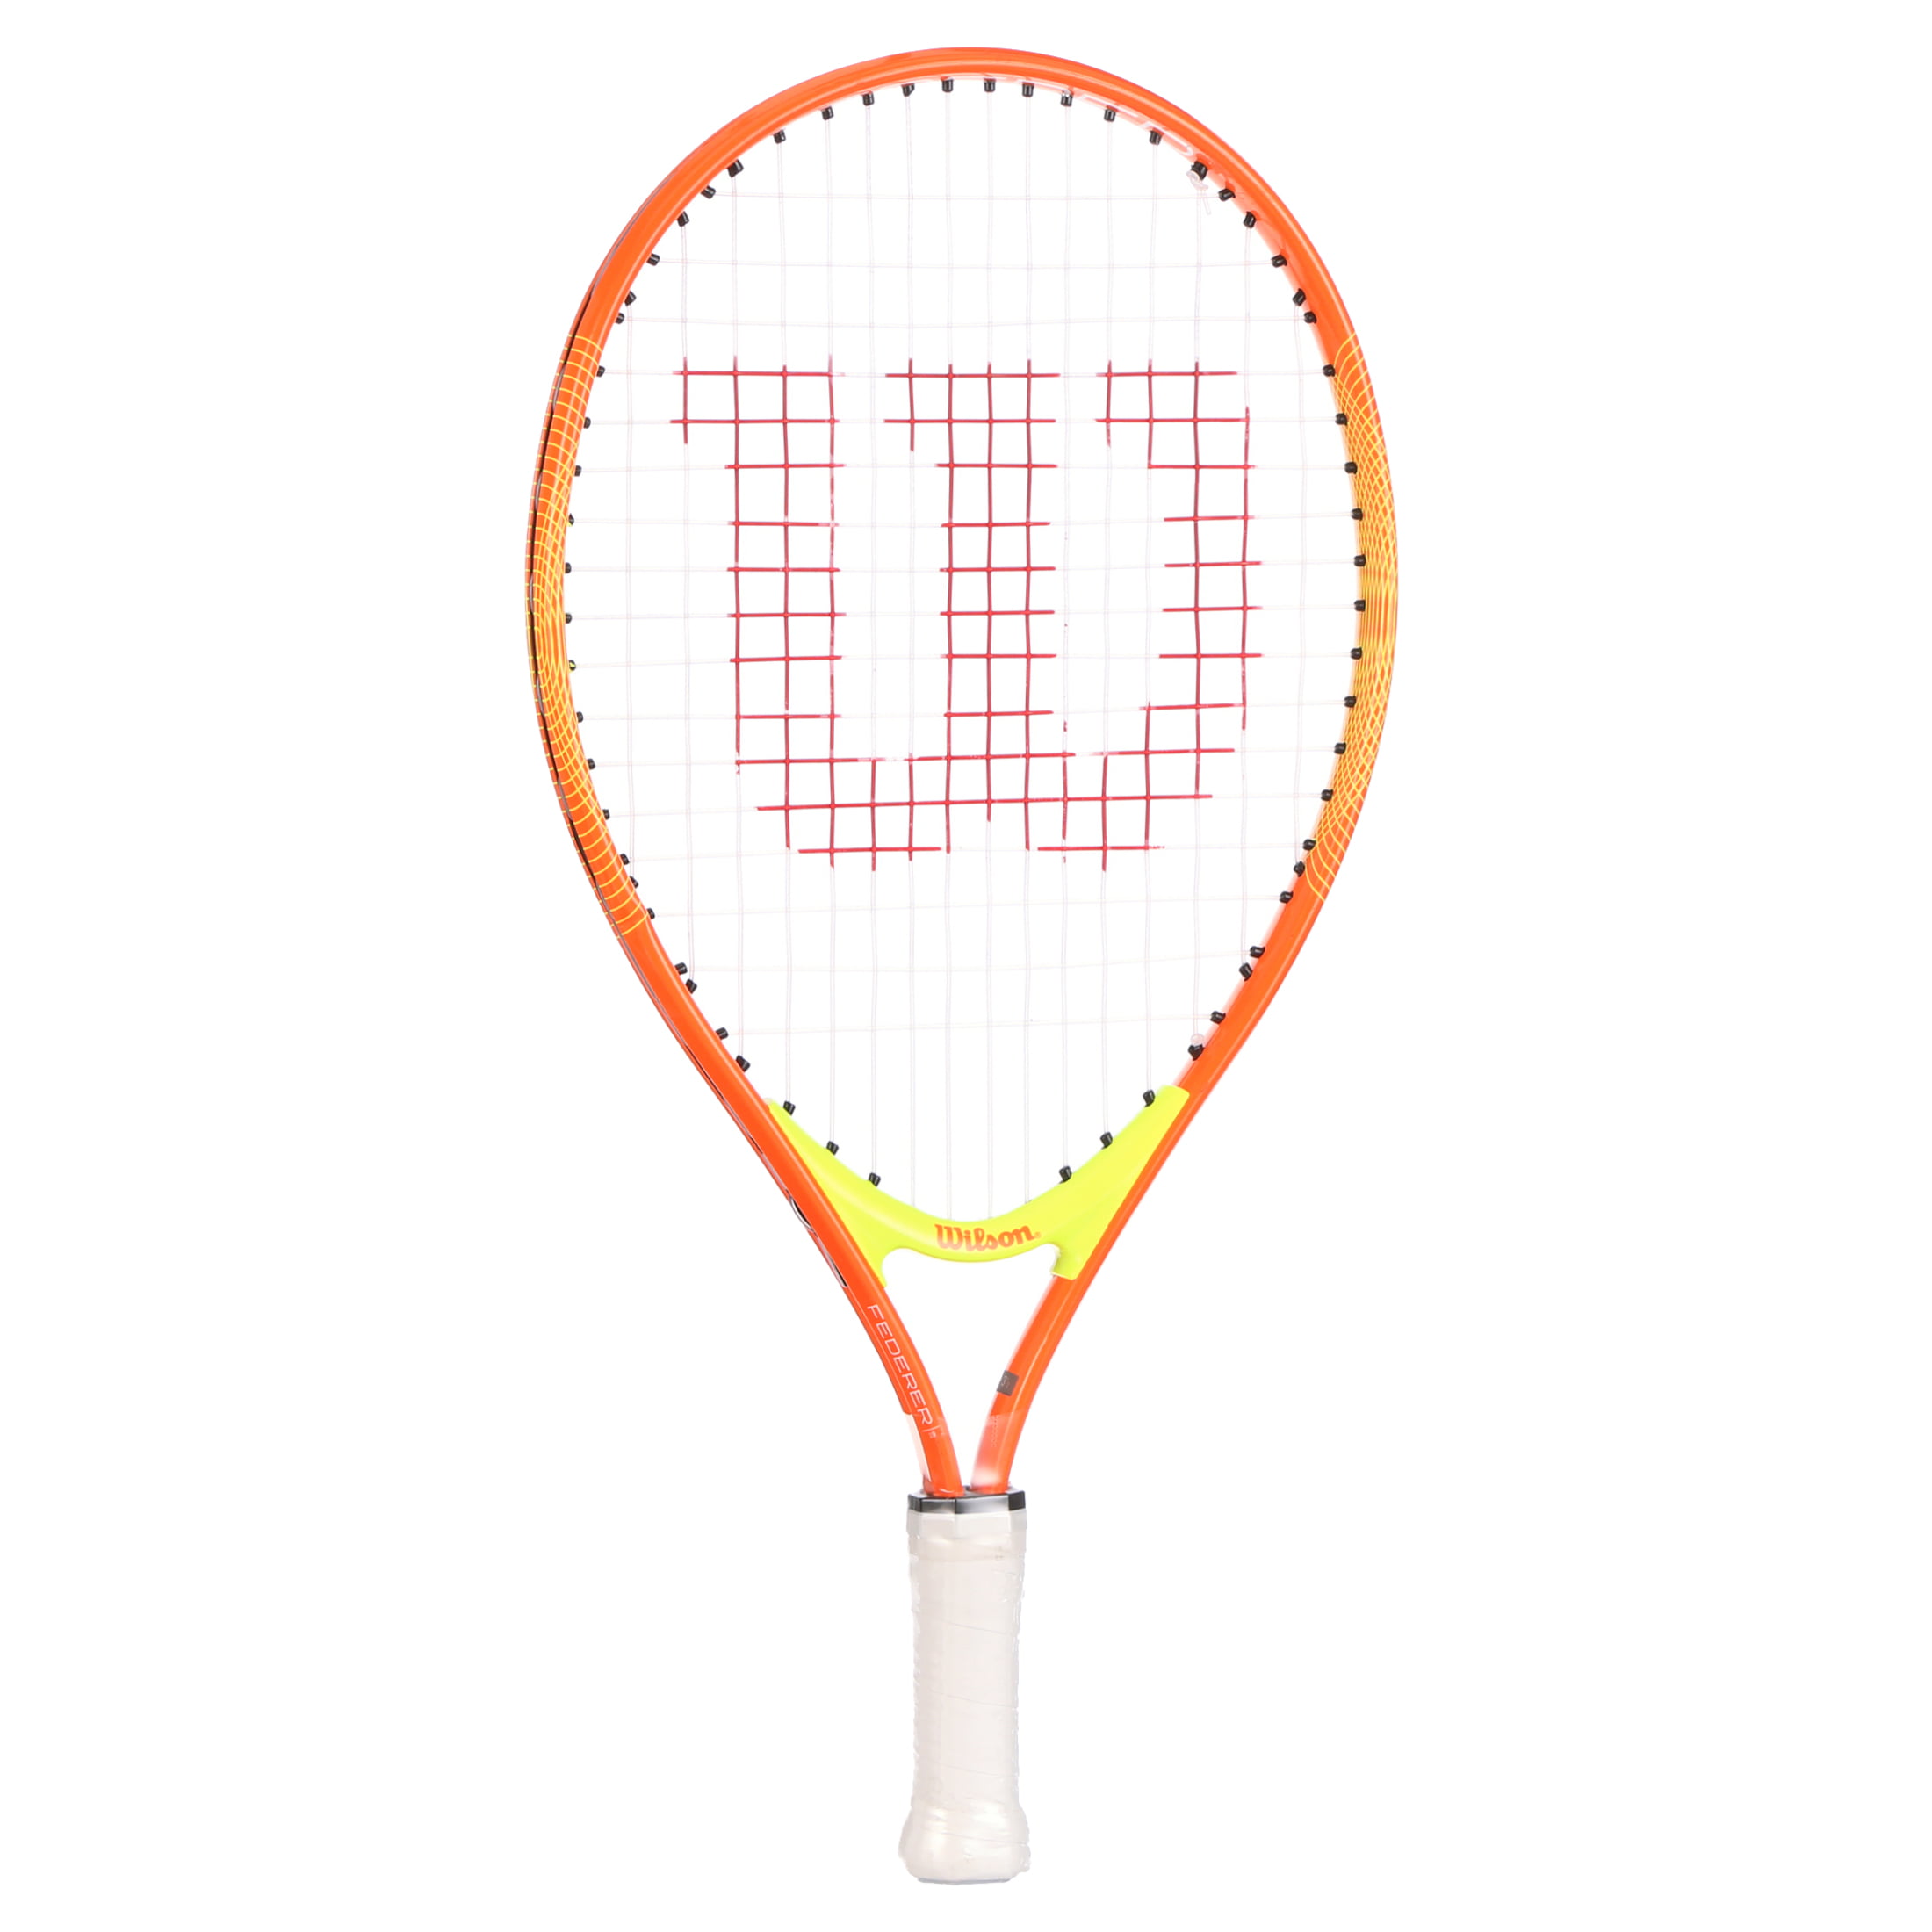  WILSON Sporting Goods Starter Orange Tennis Ball - 48  Pack,WRT13730B : Sports & Outdoors